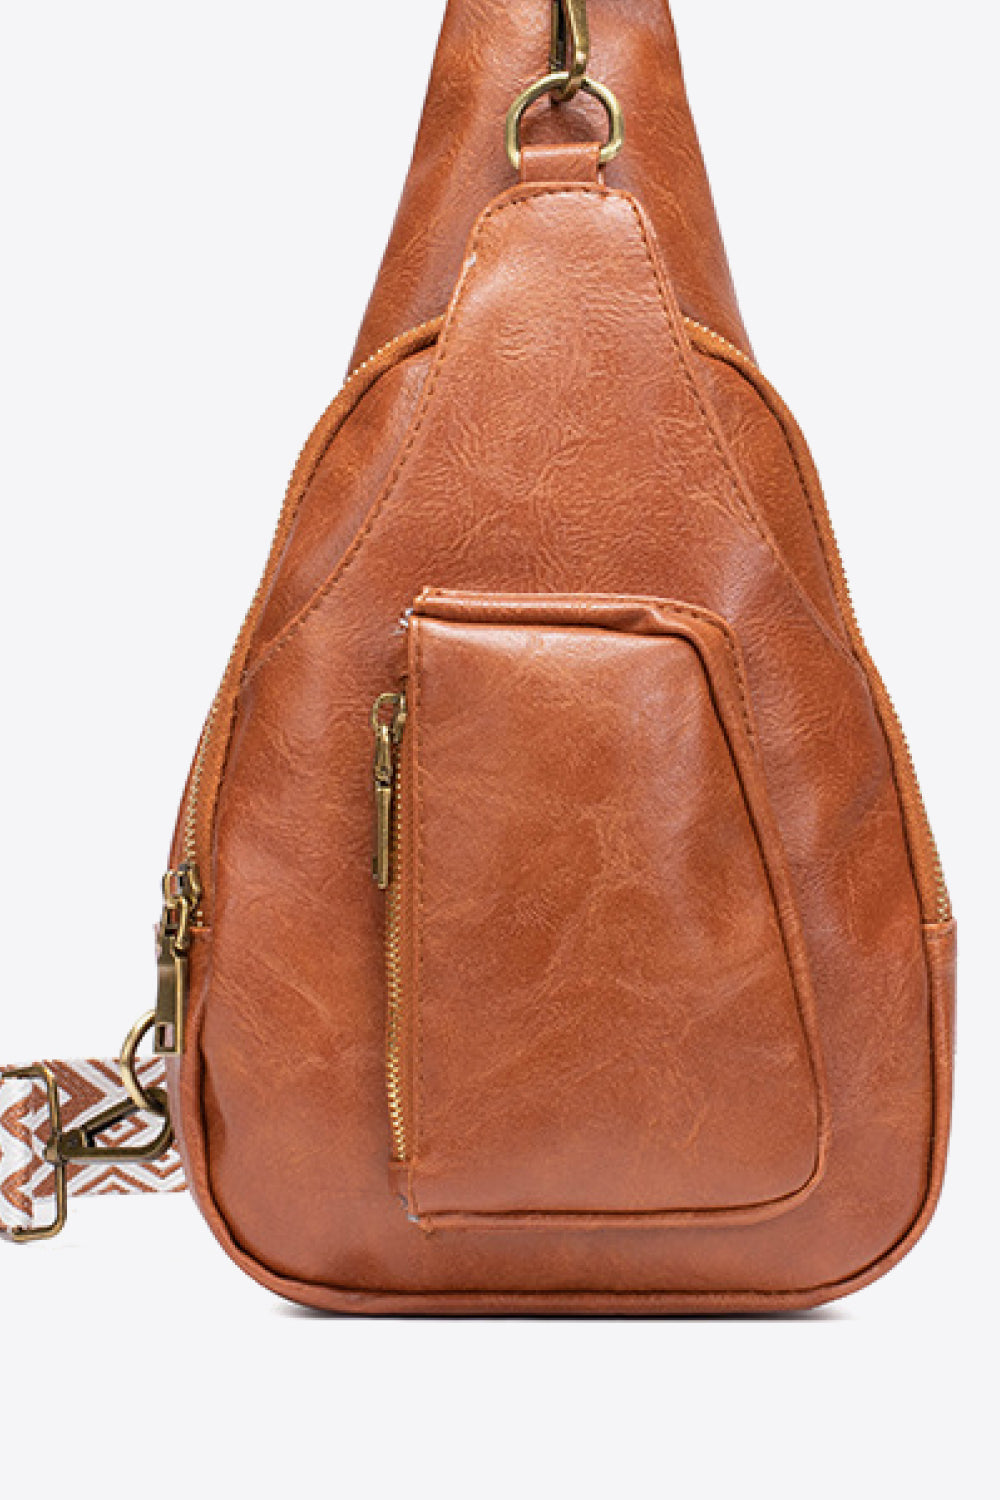 All The Feels PU Leather Sling Bag - Tigbul's Fashion